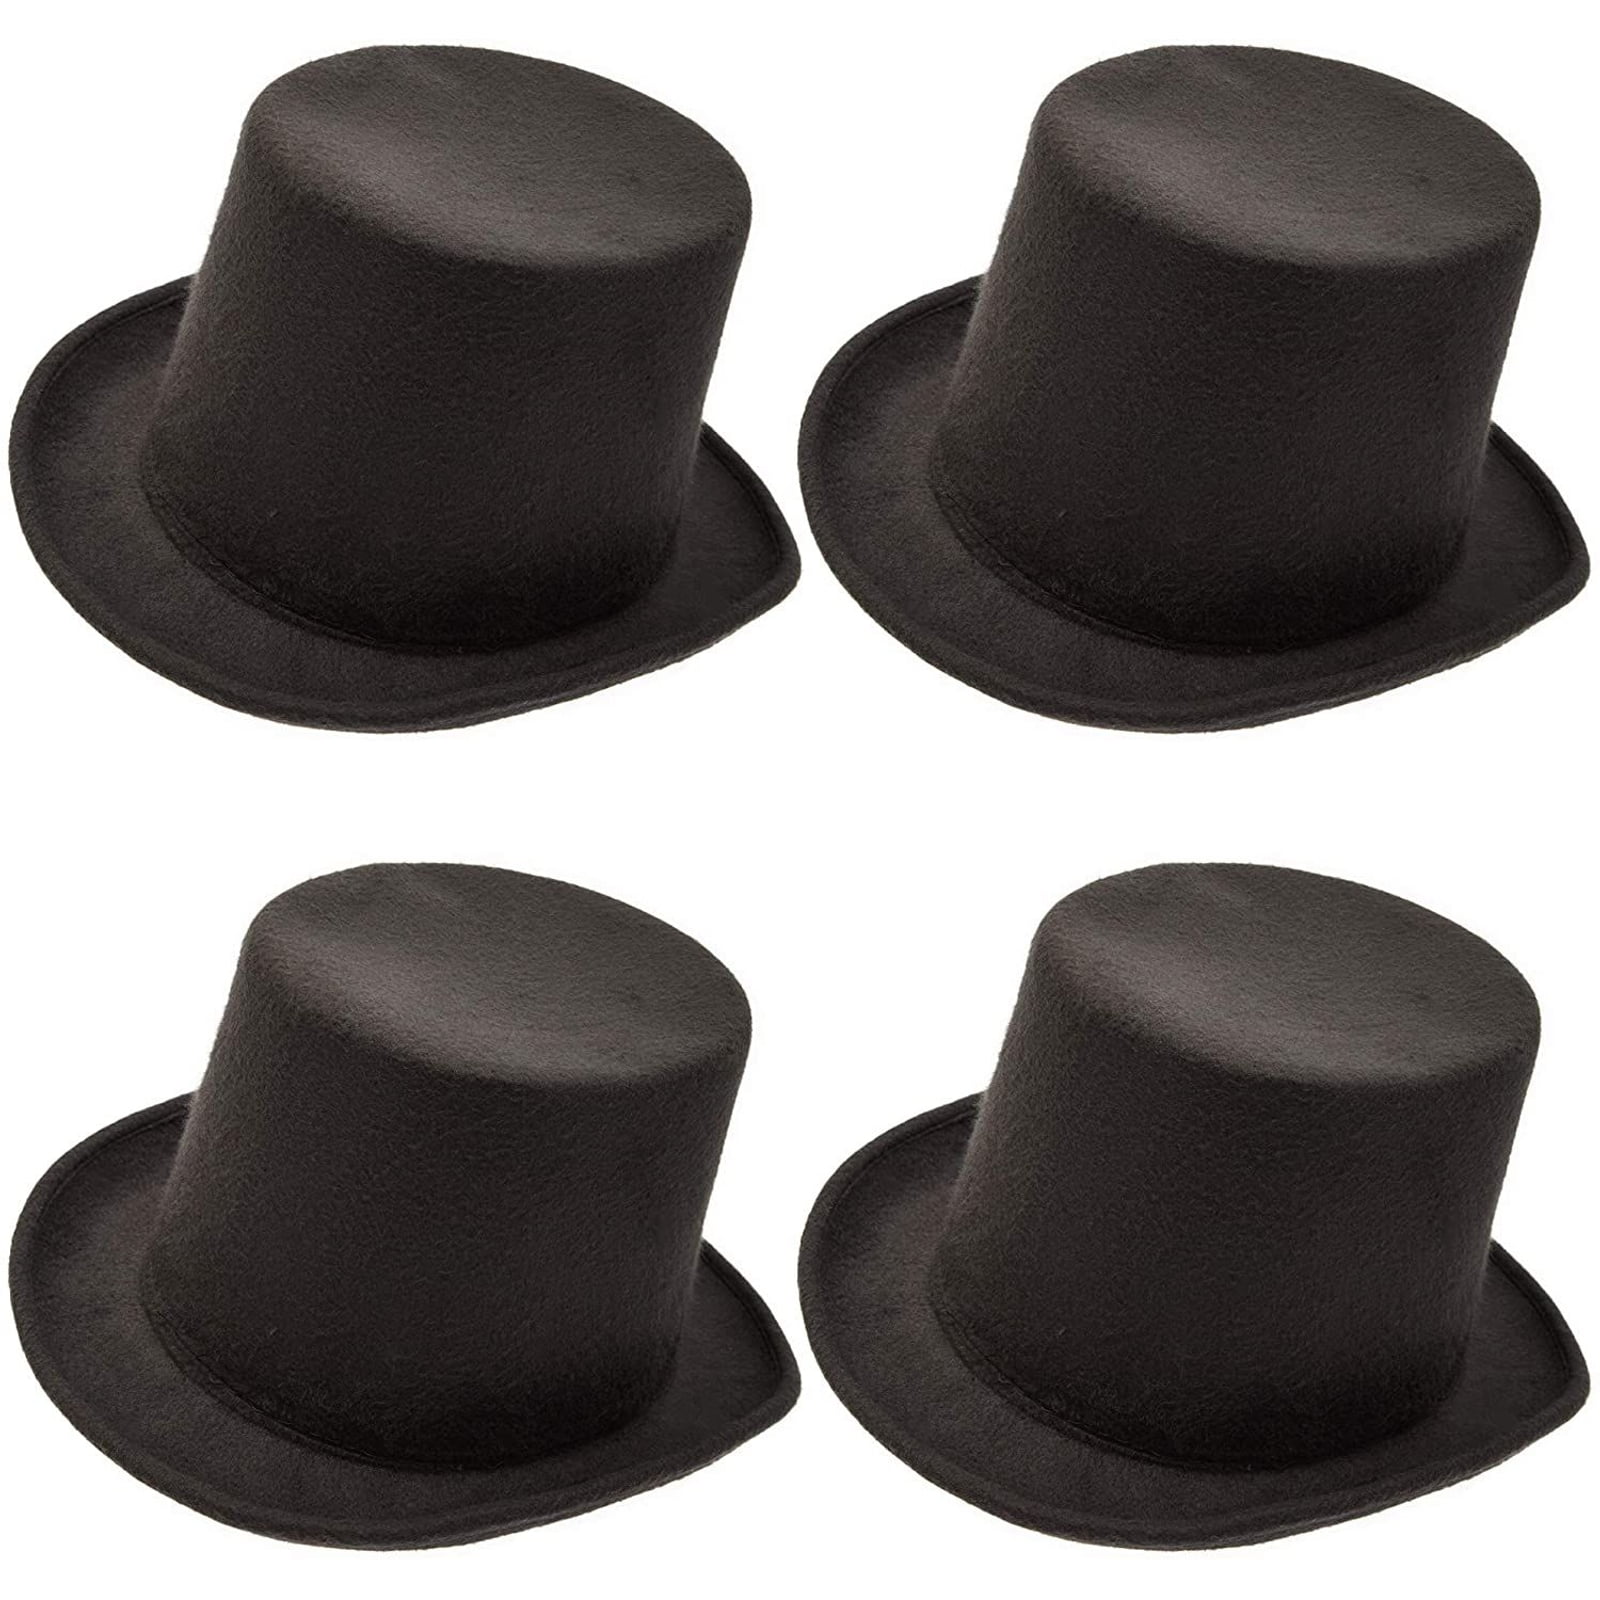 Magician Formal Black Felt Top Hat Costume Party Hats Halloween Cosplay Cap New 